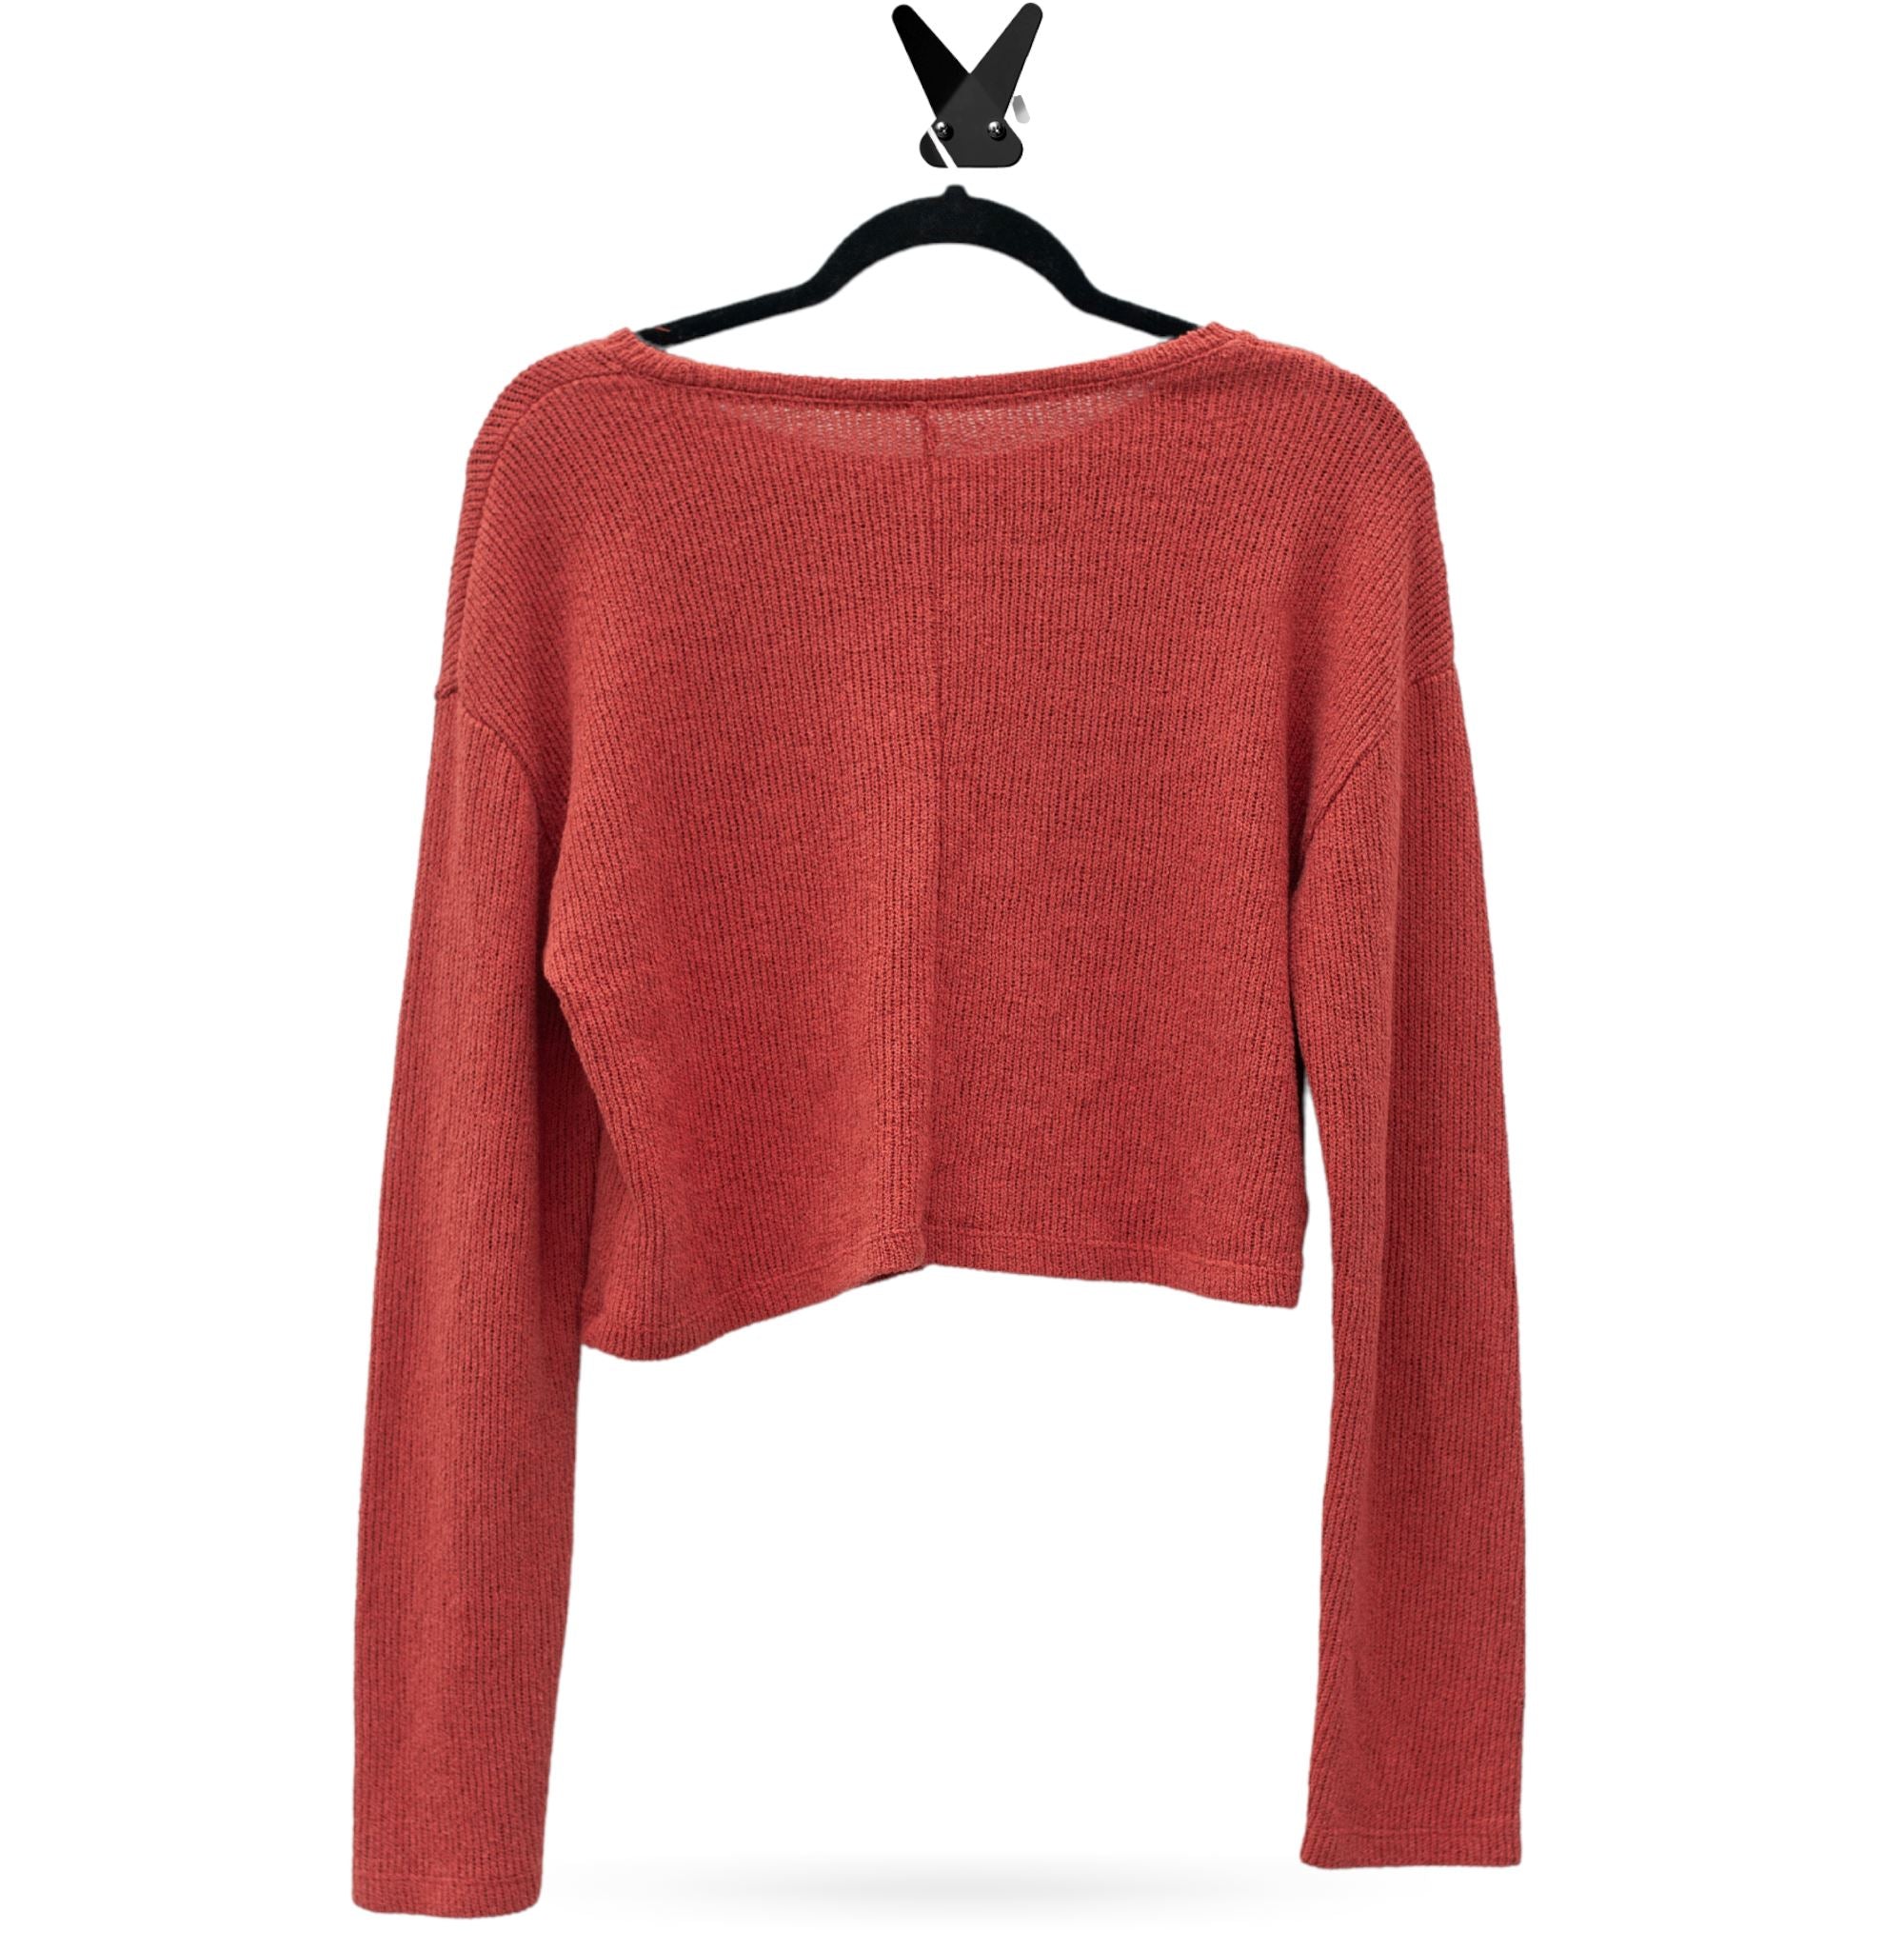 Upcycled Sweater Shirts & Tops Lara Dee Artistry